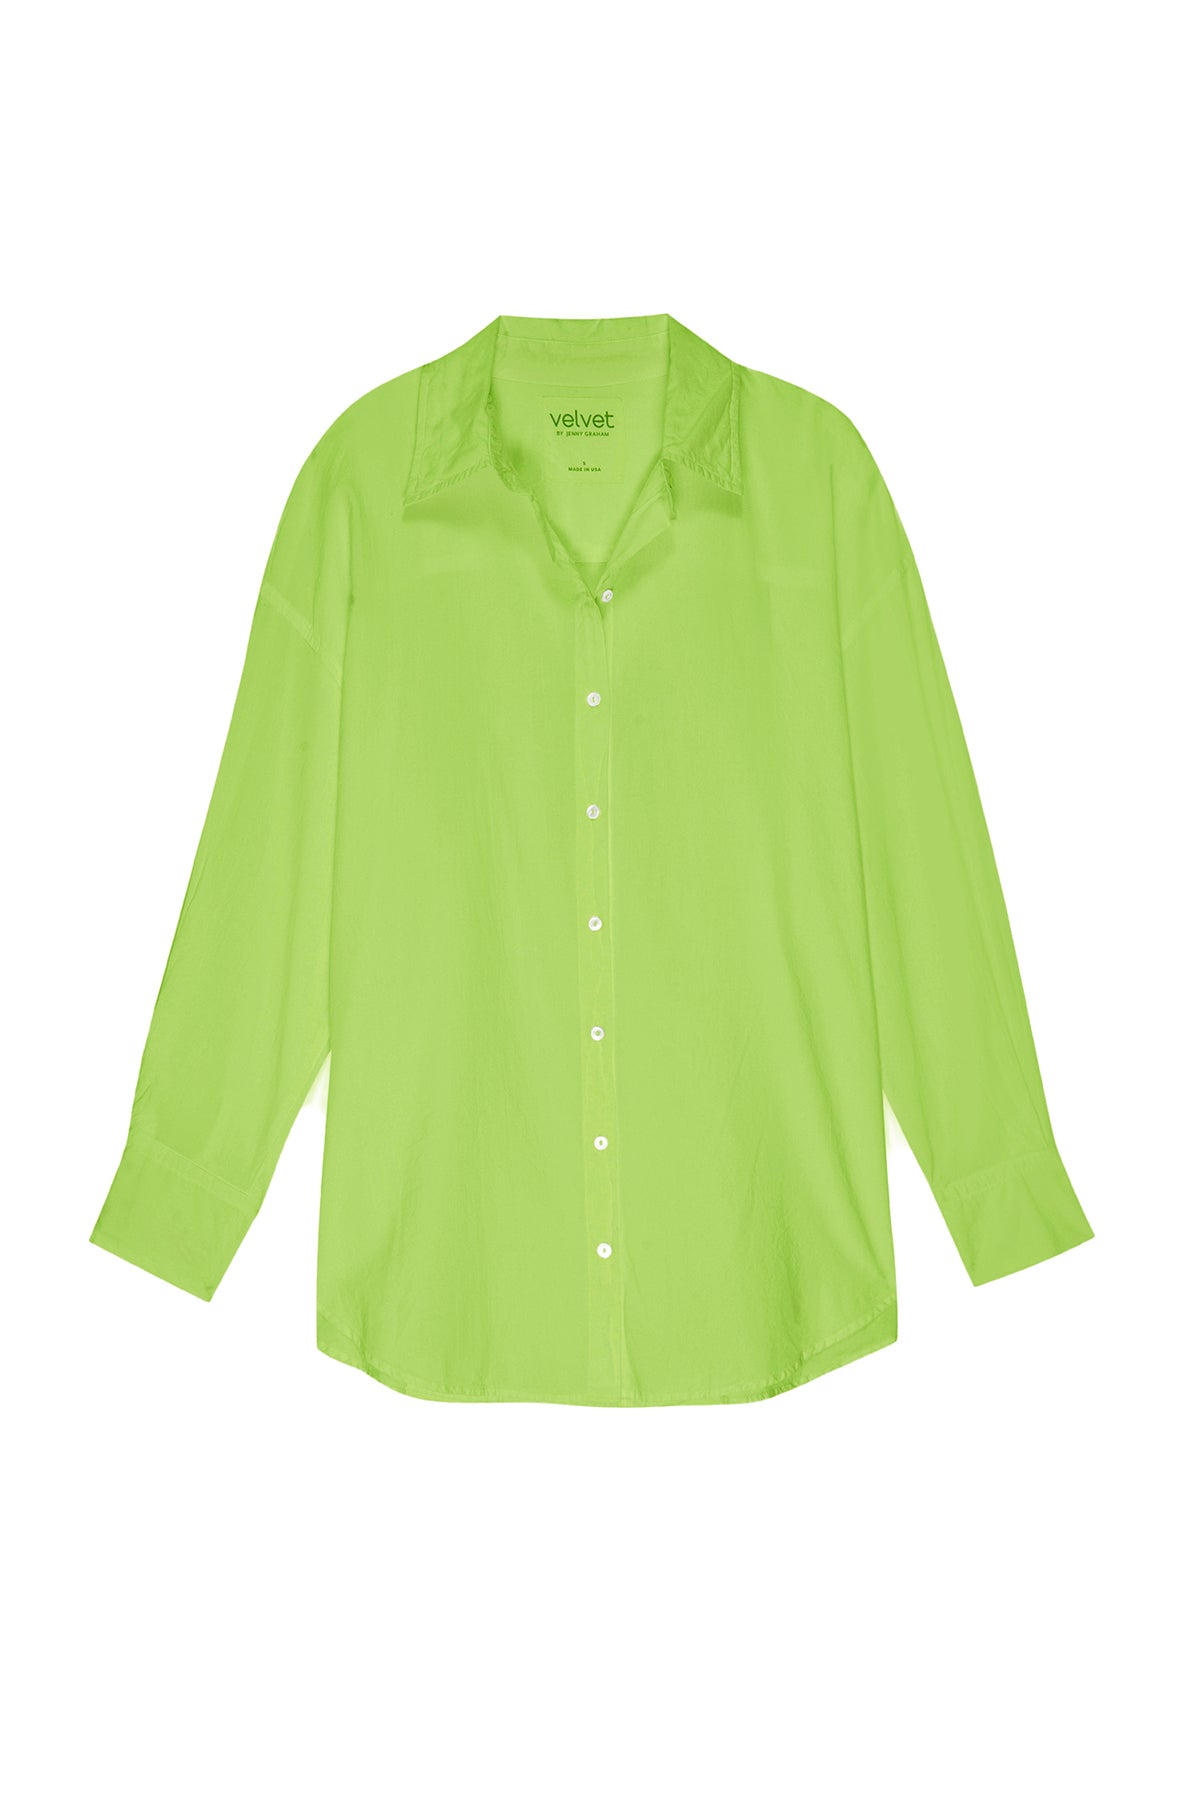   Redondo Button-Up Shirt in acid green flat 